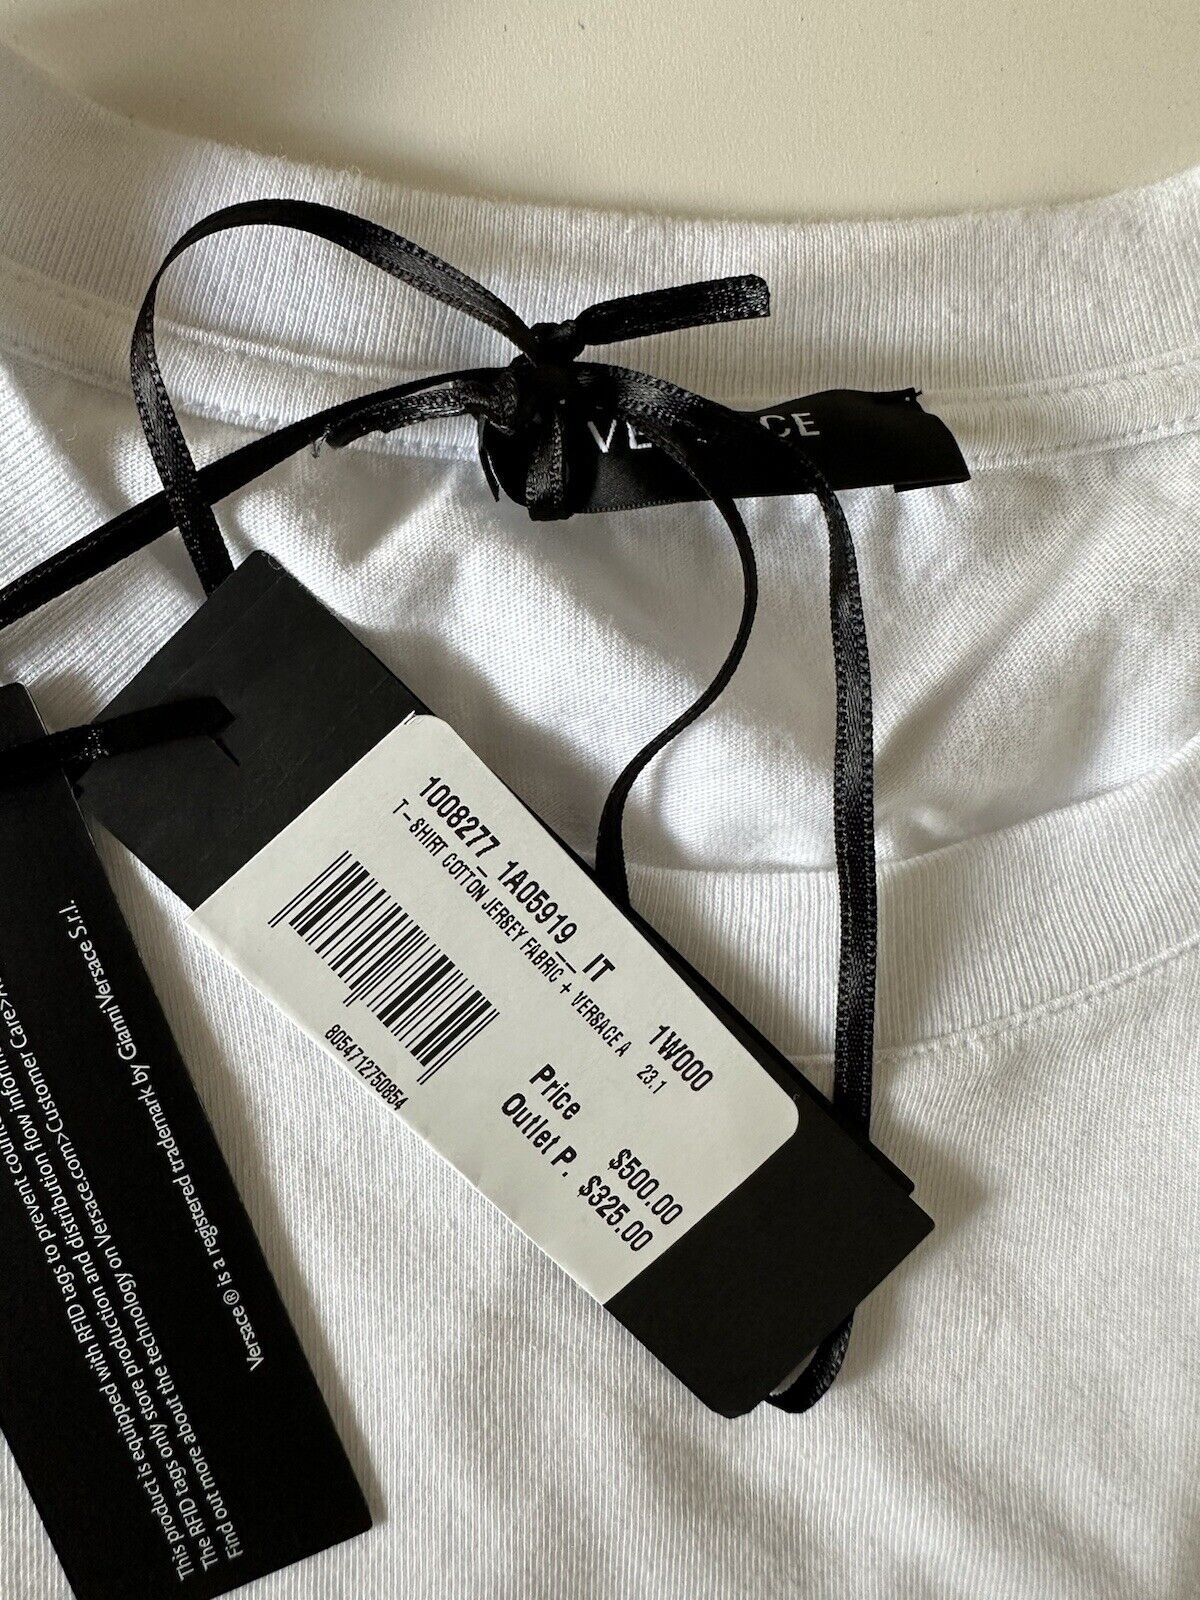 Versace Greek Key and Versace Logo White T-Shirt 5XL 1A05919 Italy NWT $500